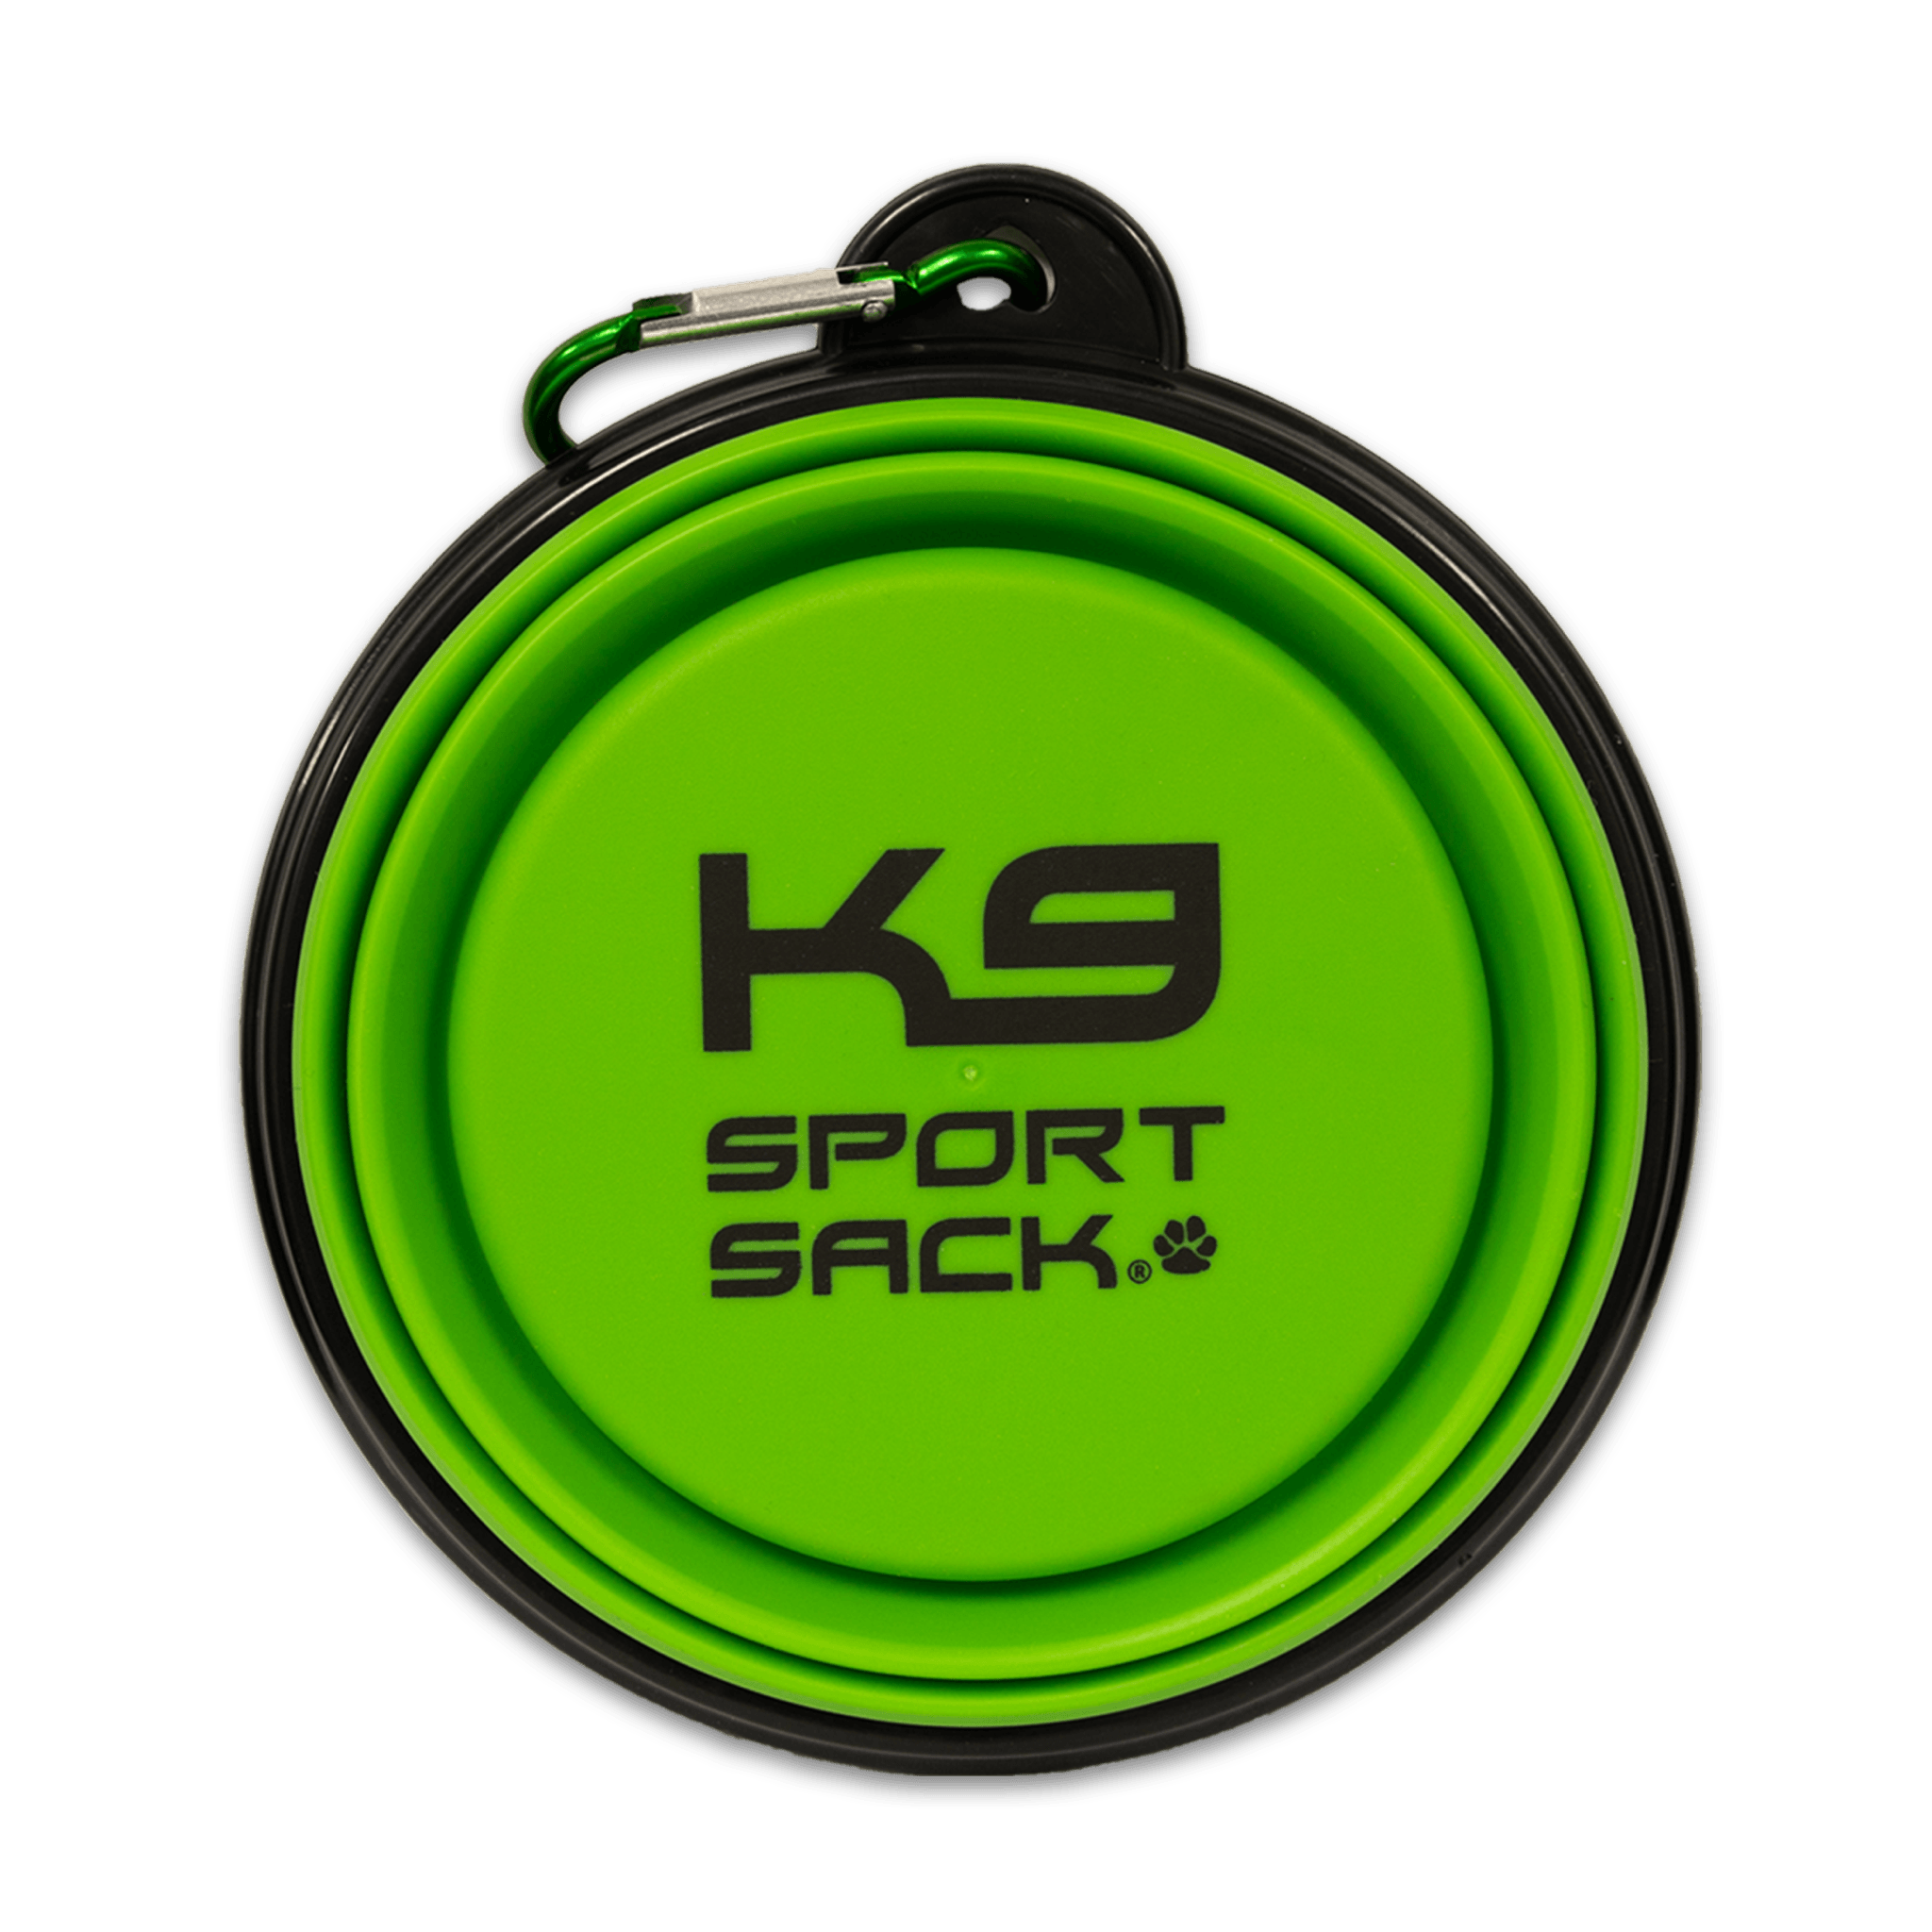 Green K9 Saucers